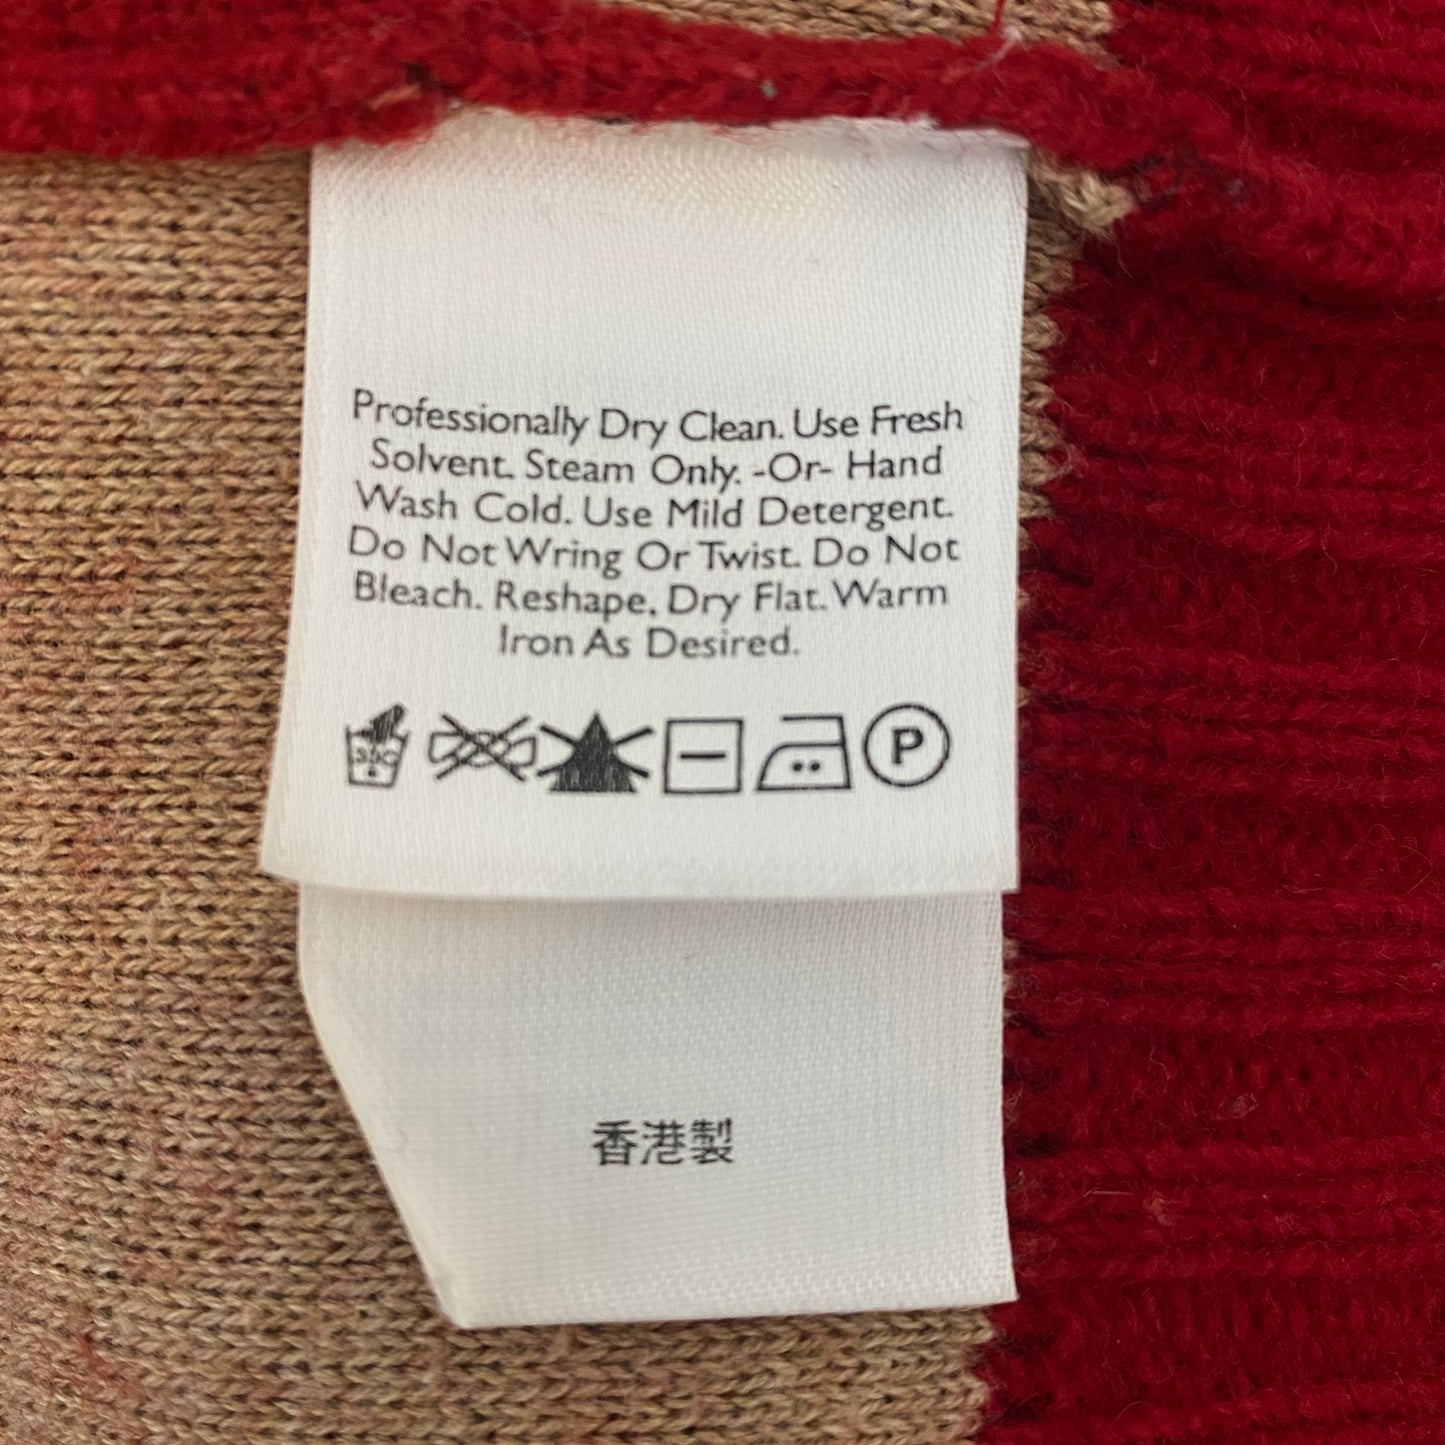 Eddie Bauer Red Soft Lambswool Hooded Zipped Cardigan Size Medium